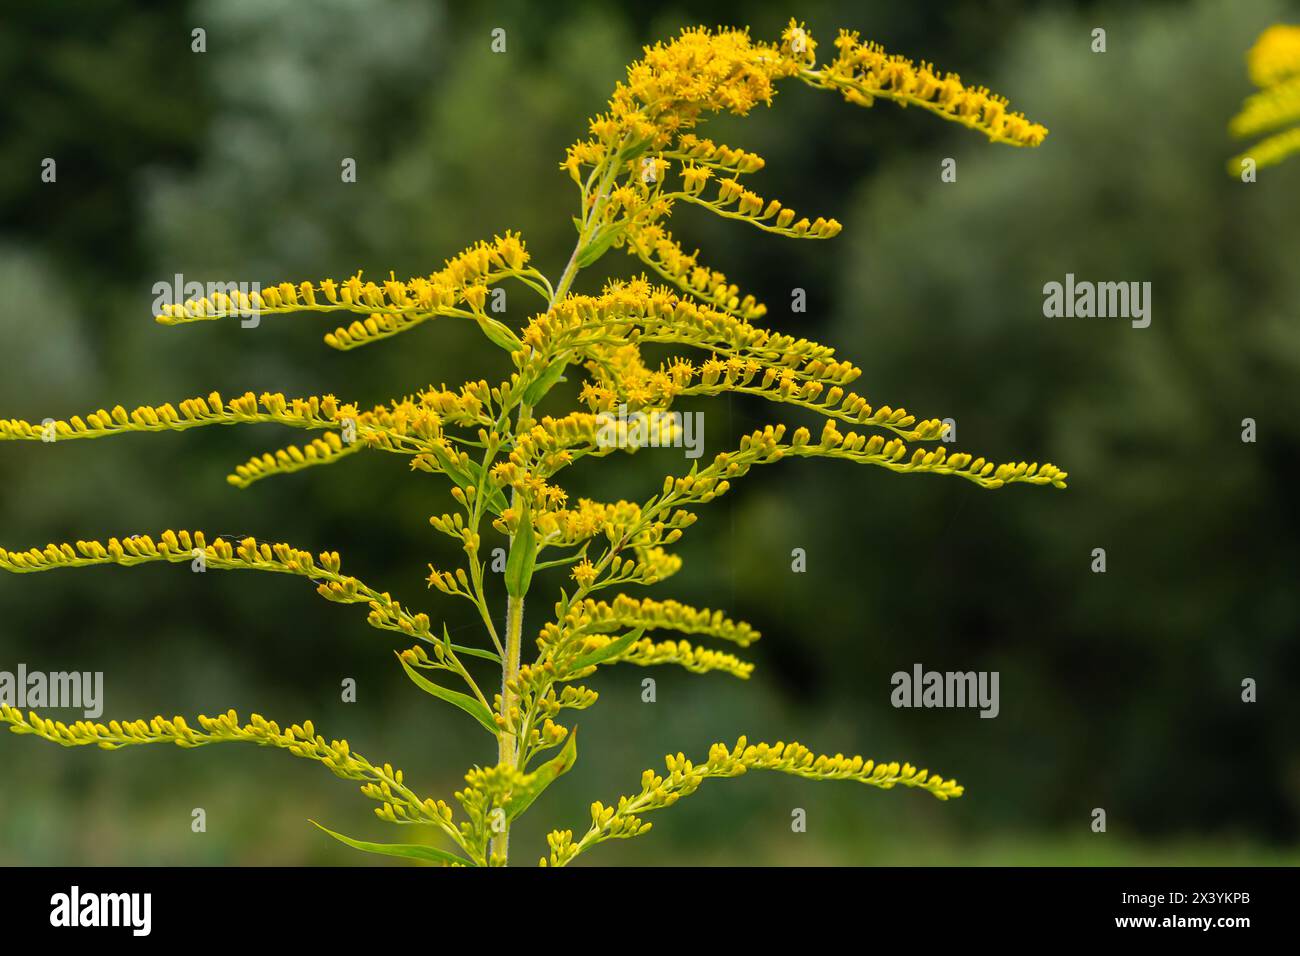 The wild flowers of Solidago altissima in autumn. Stock Photo